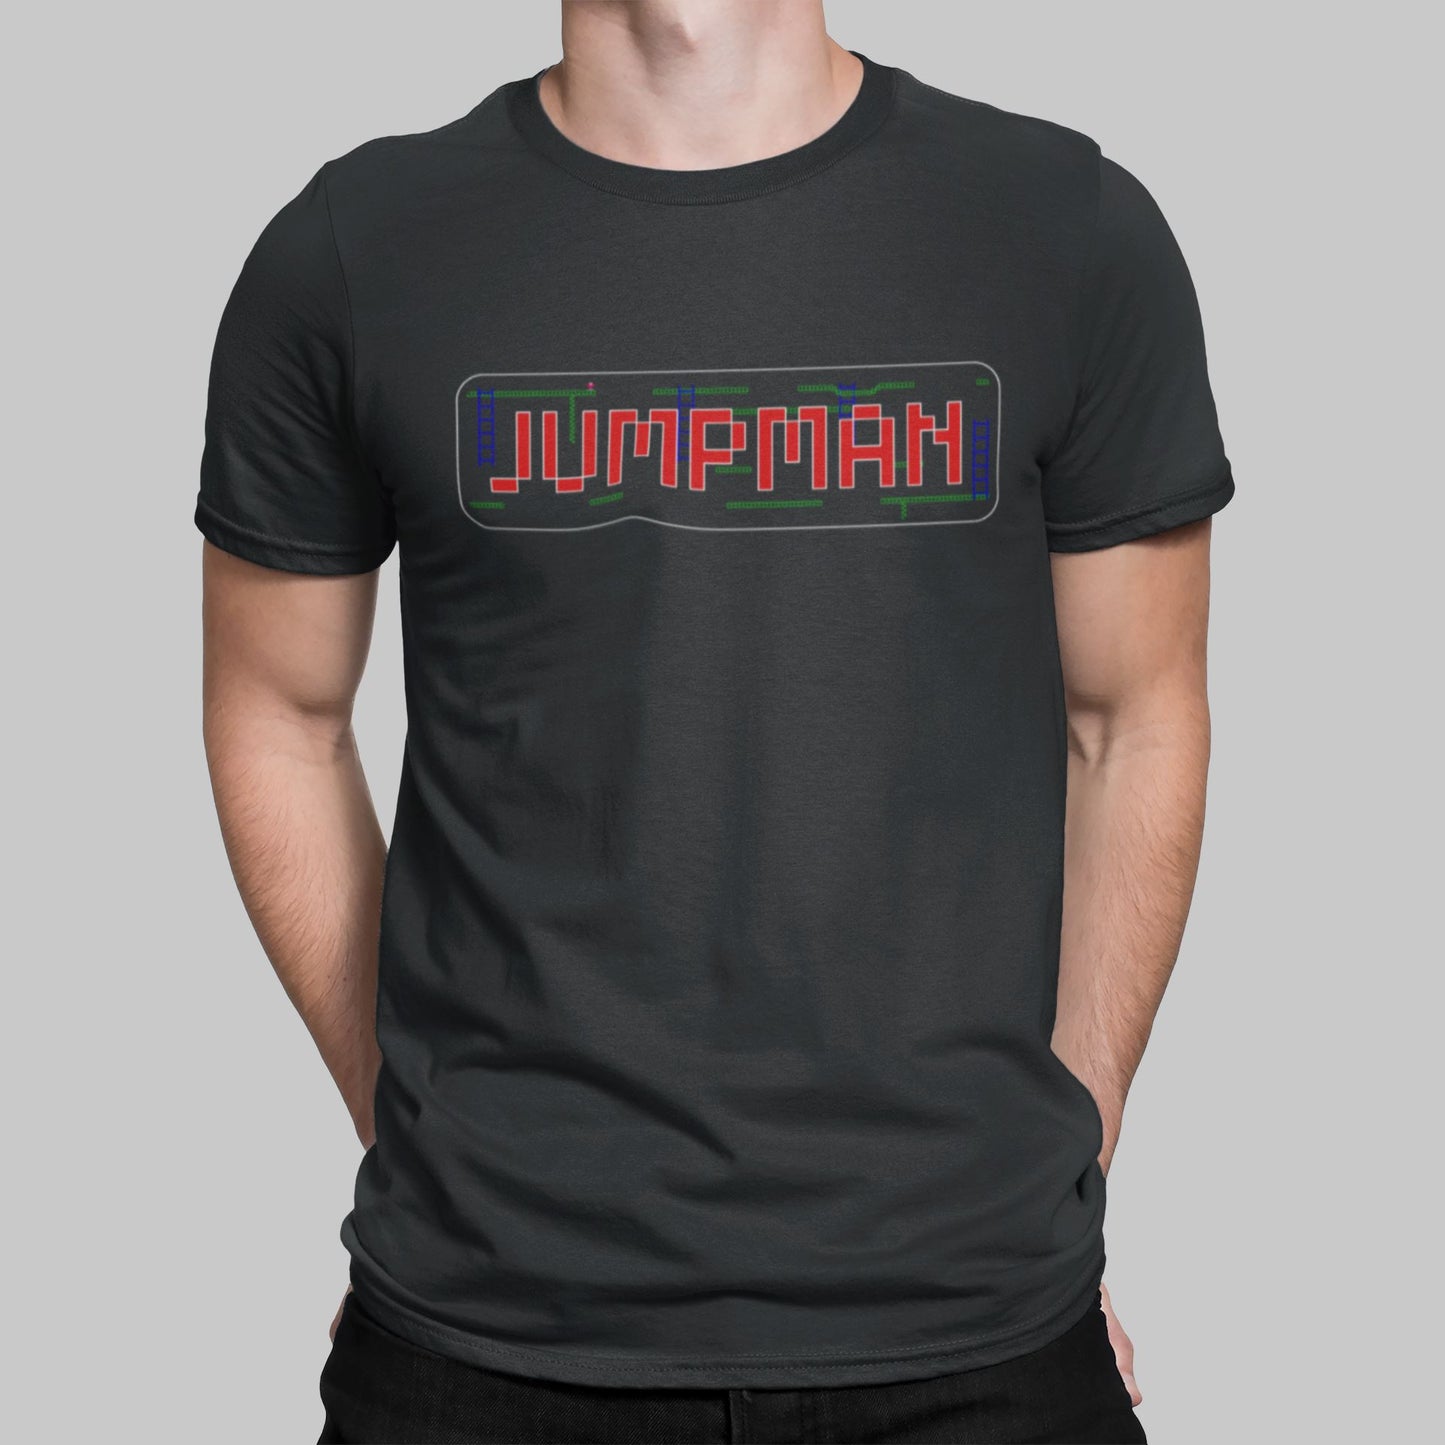 Jumpman Retro Gaming T-Shirt T-Shirt Seven Squared Small 34-36" Black 